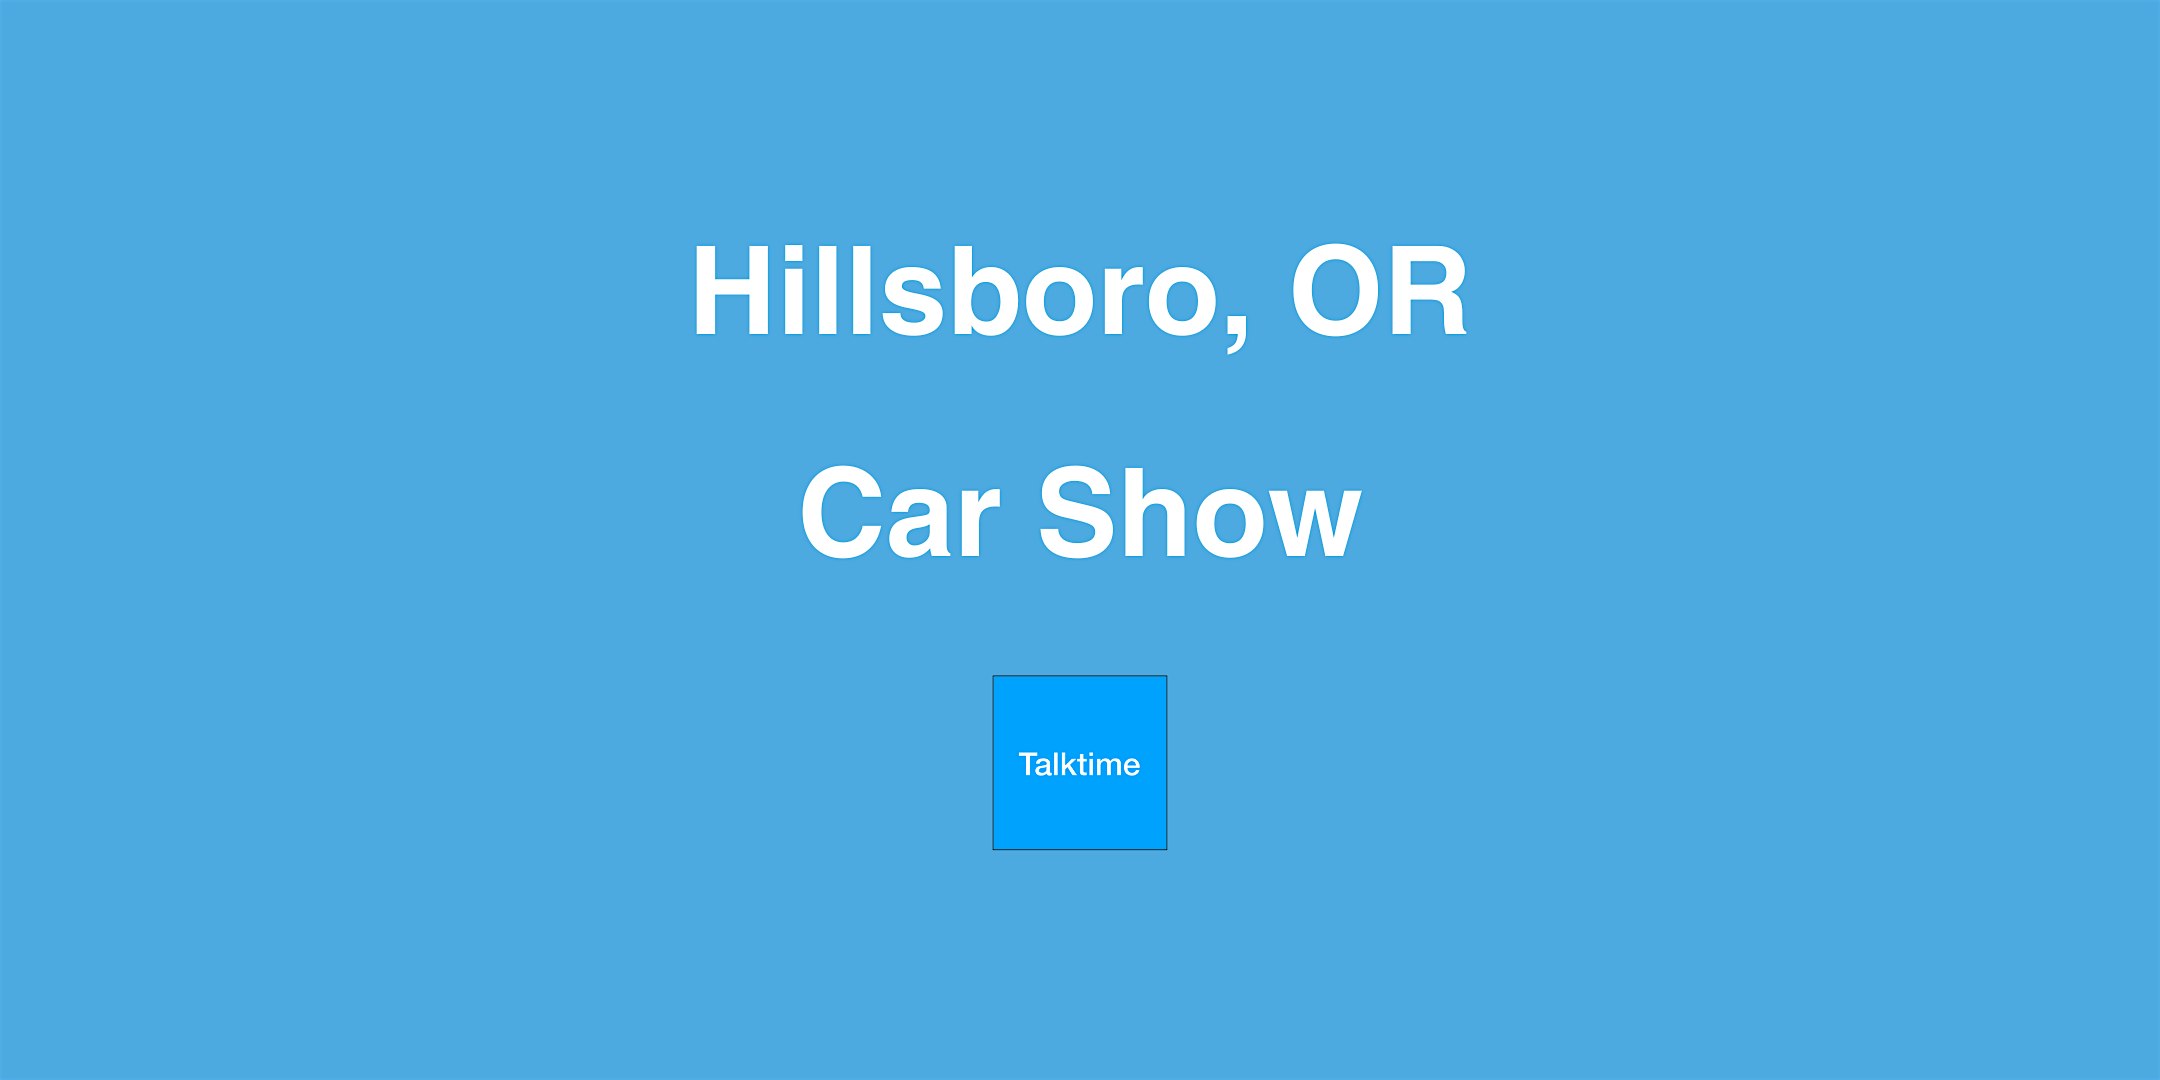 Car Show - Hillsboro